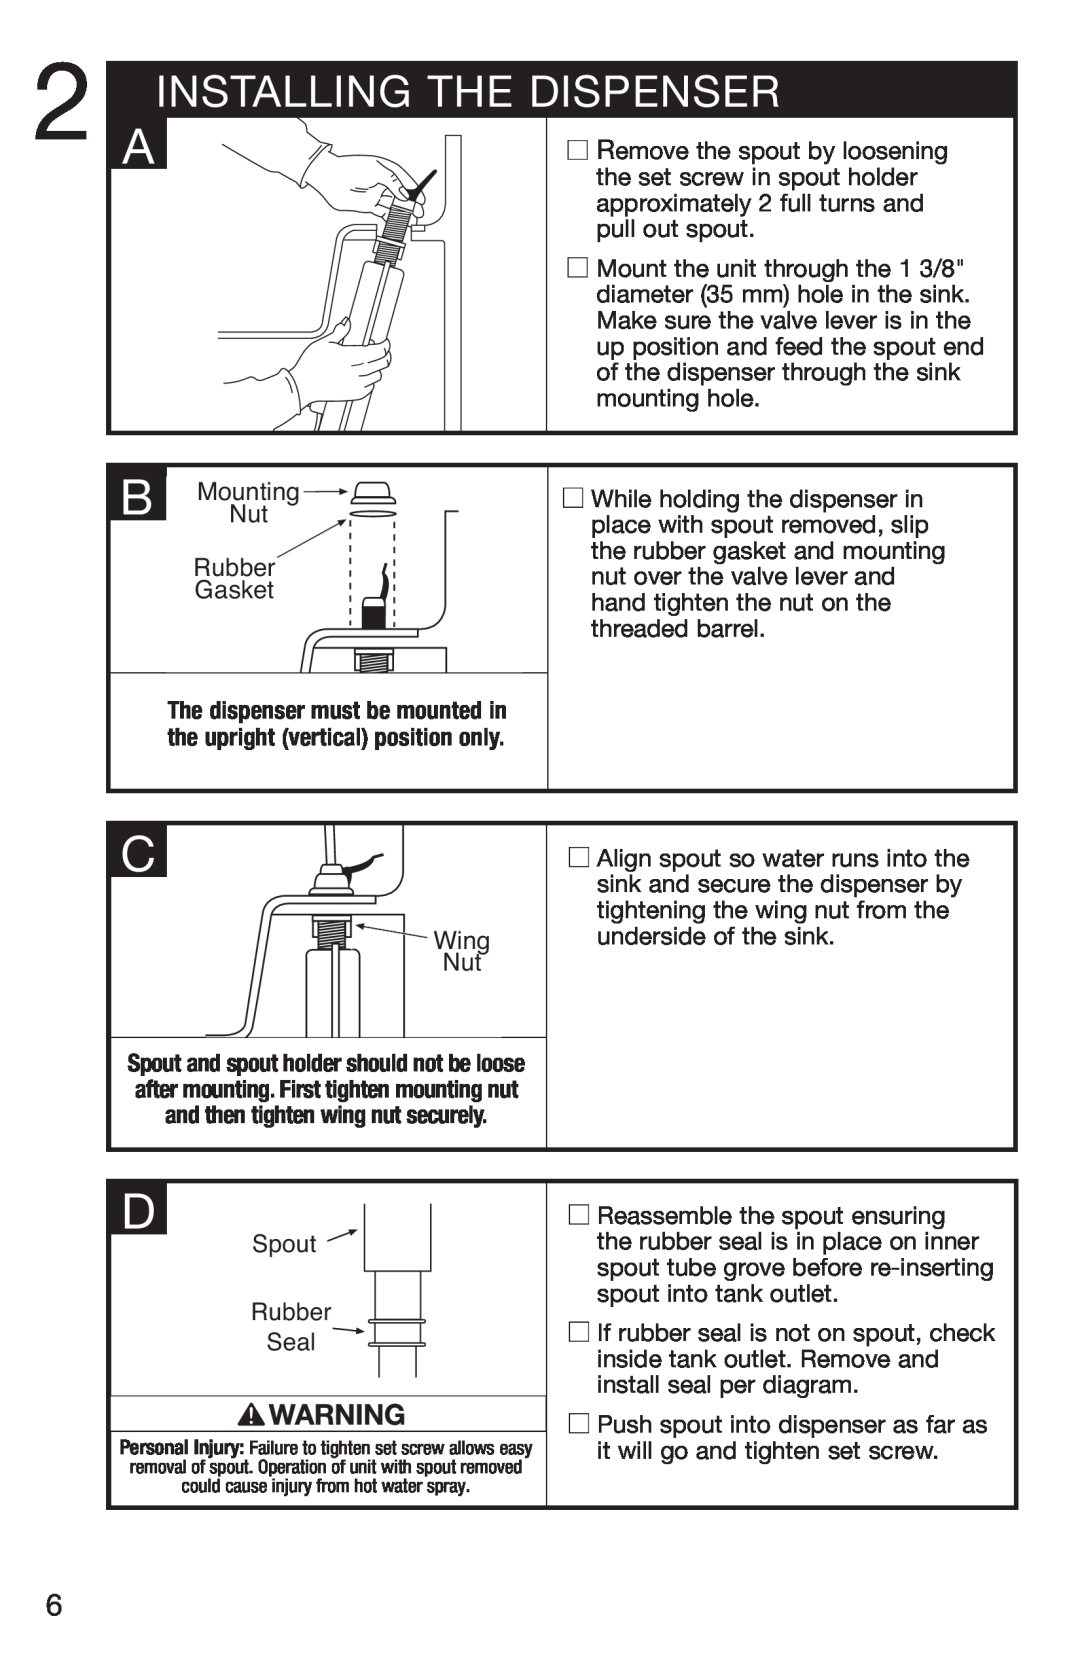 Emerson Hot1 manual Installing The Dispenser 